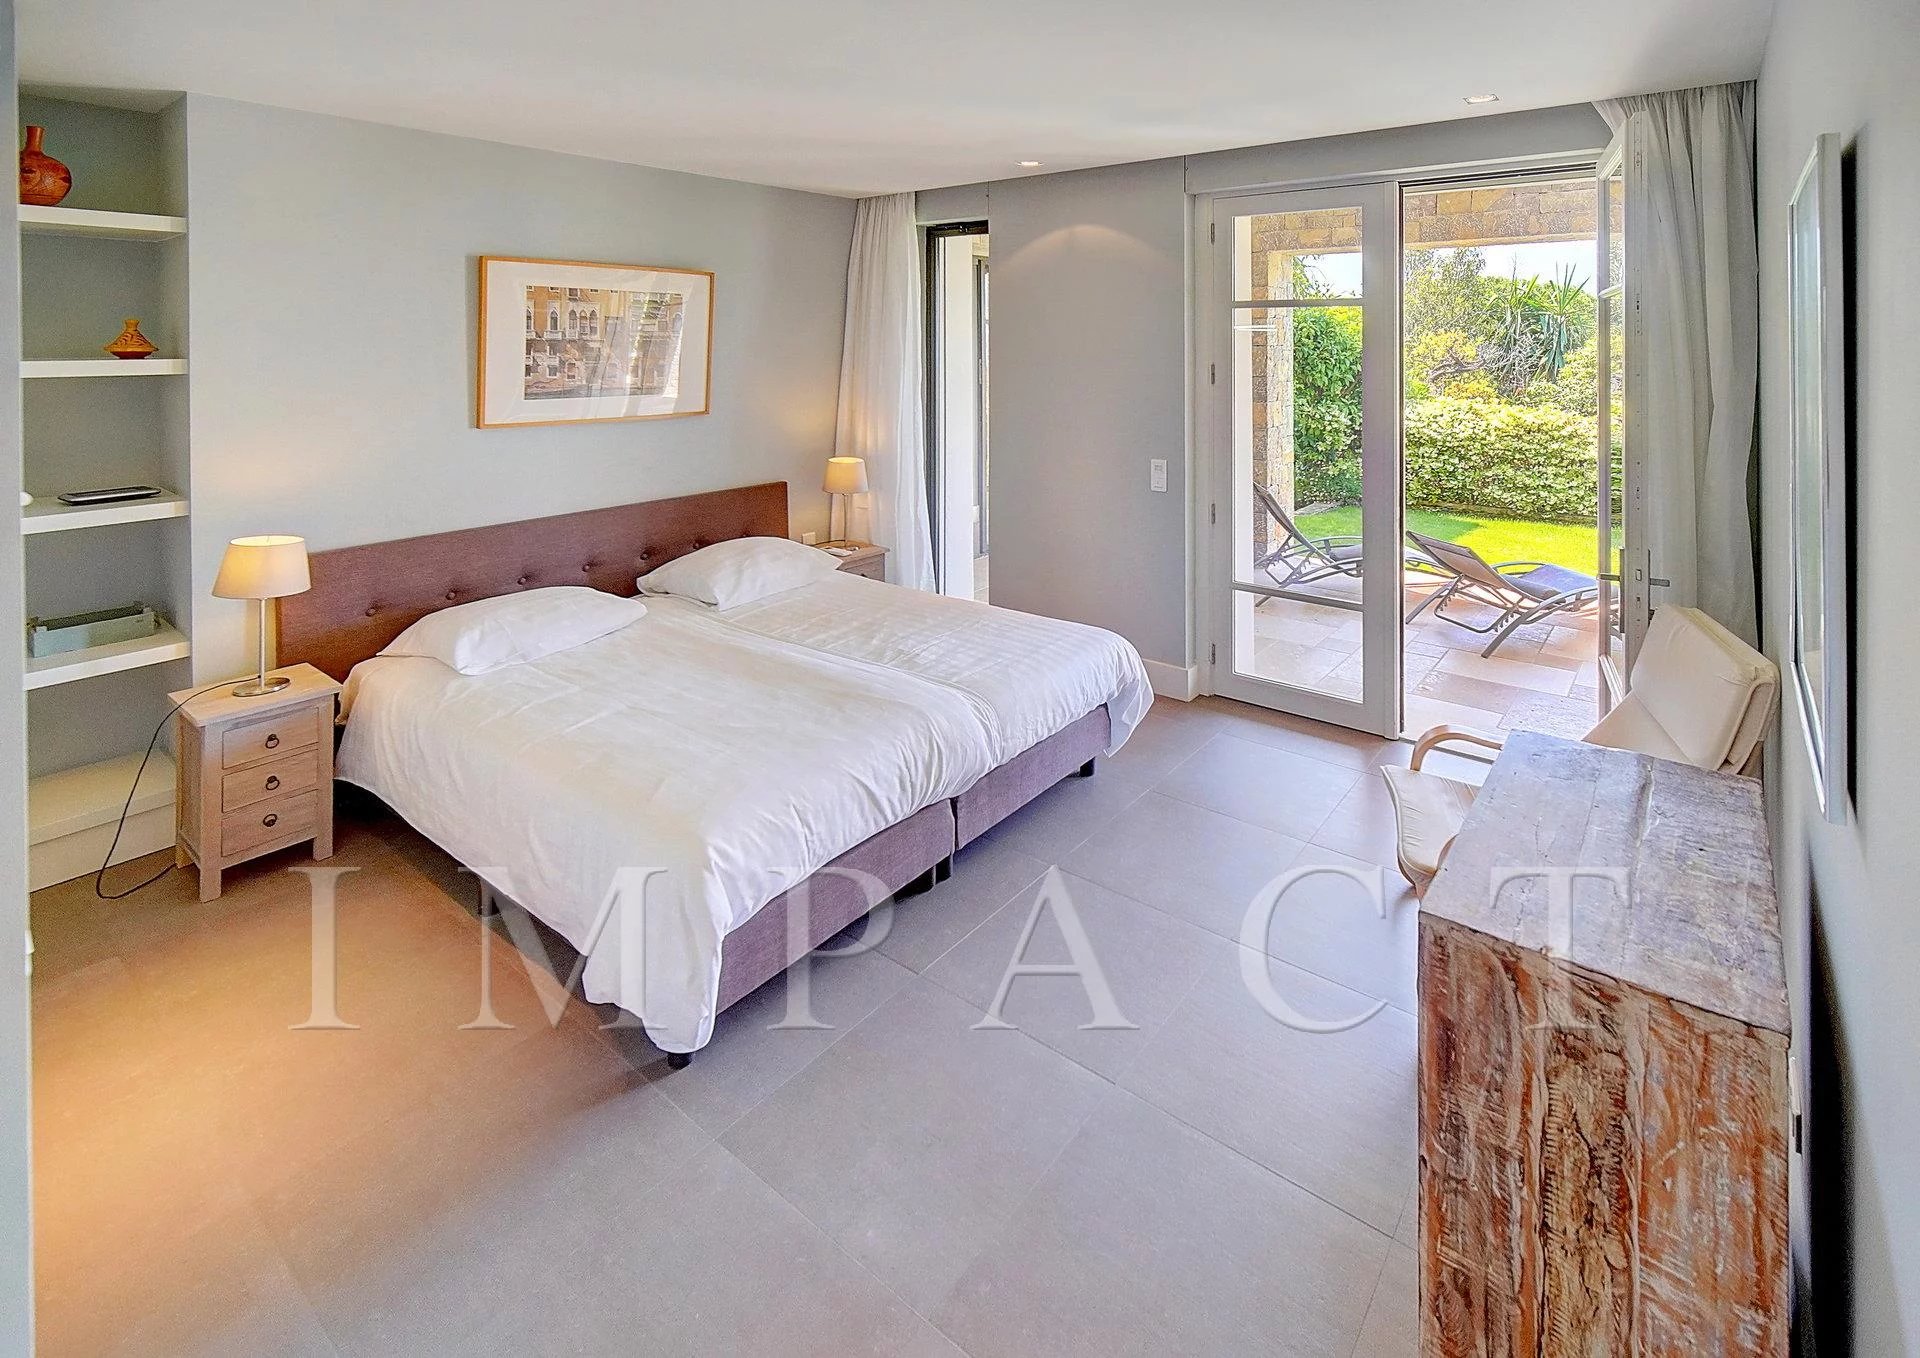 Villa for rent Cap d'Antibes